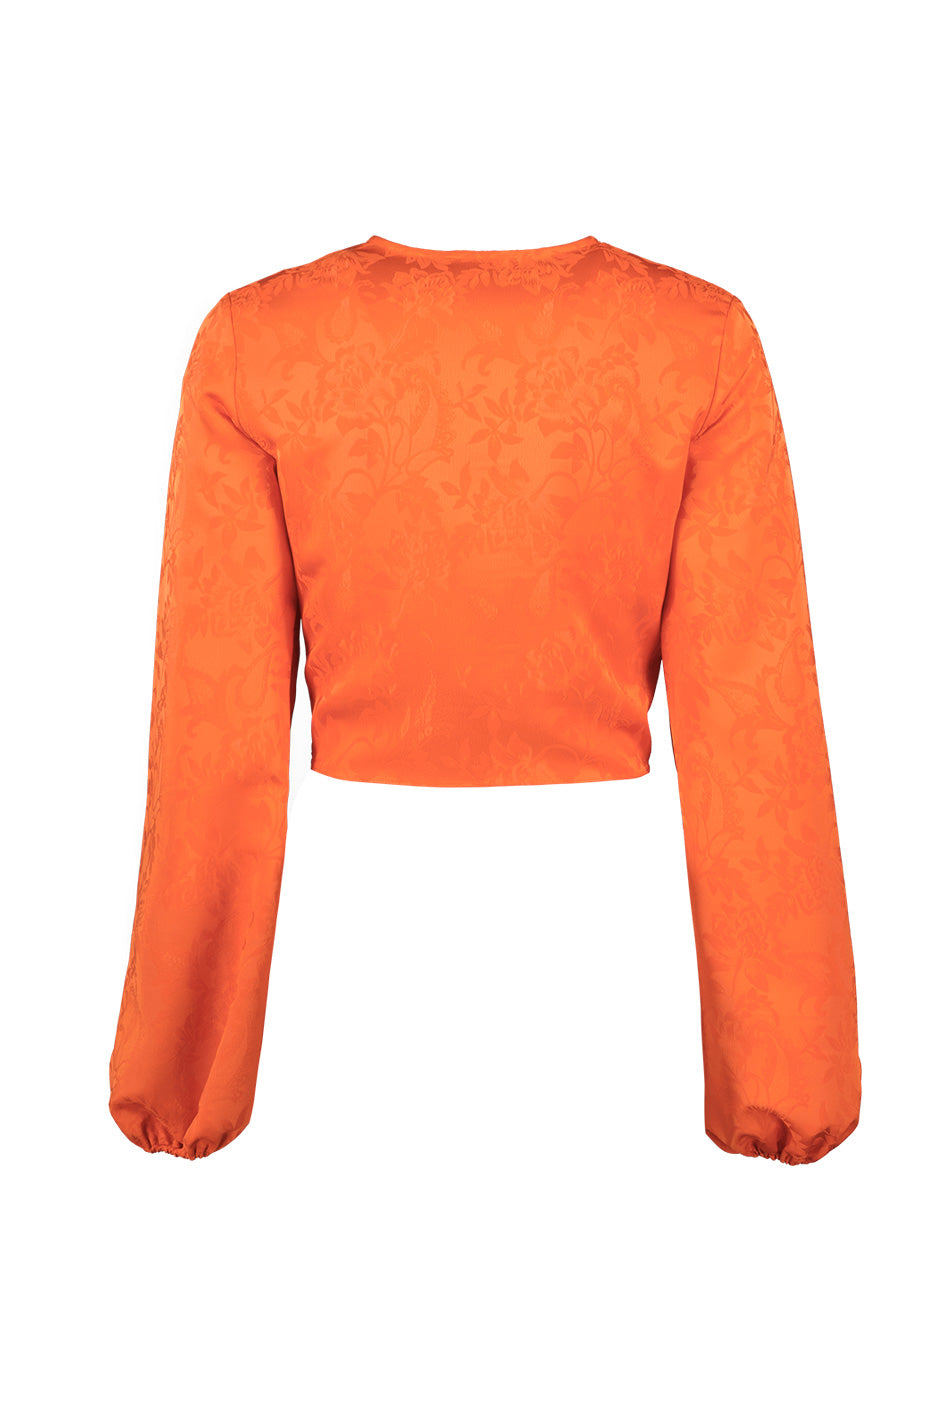 Blusa naranja de manga larga con detalle en pecho